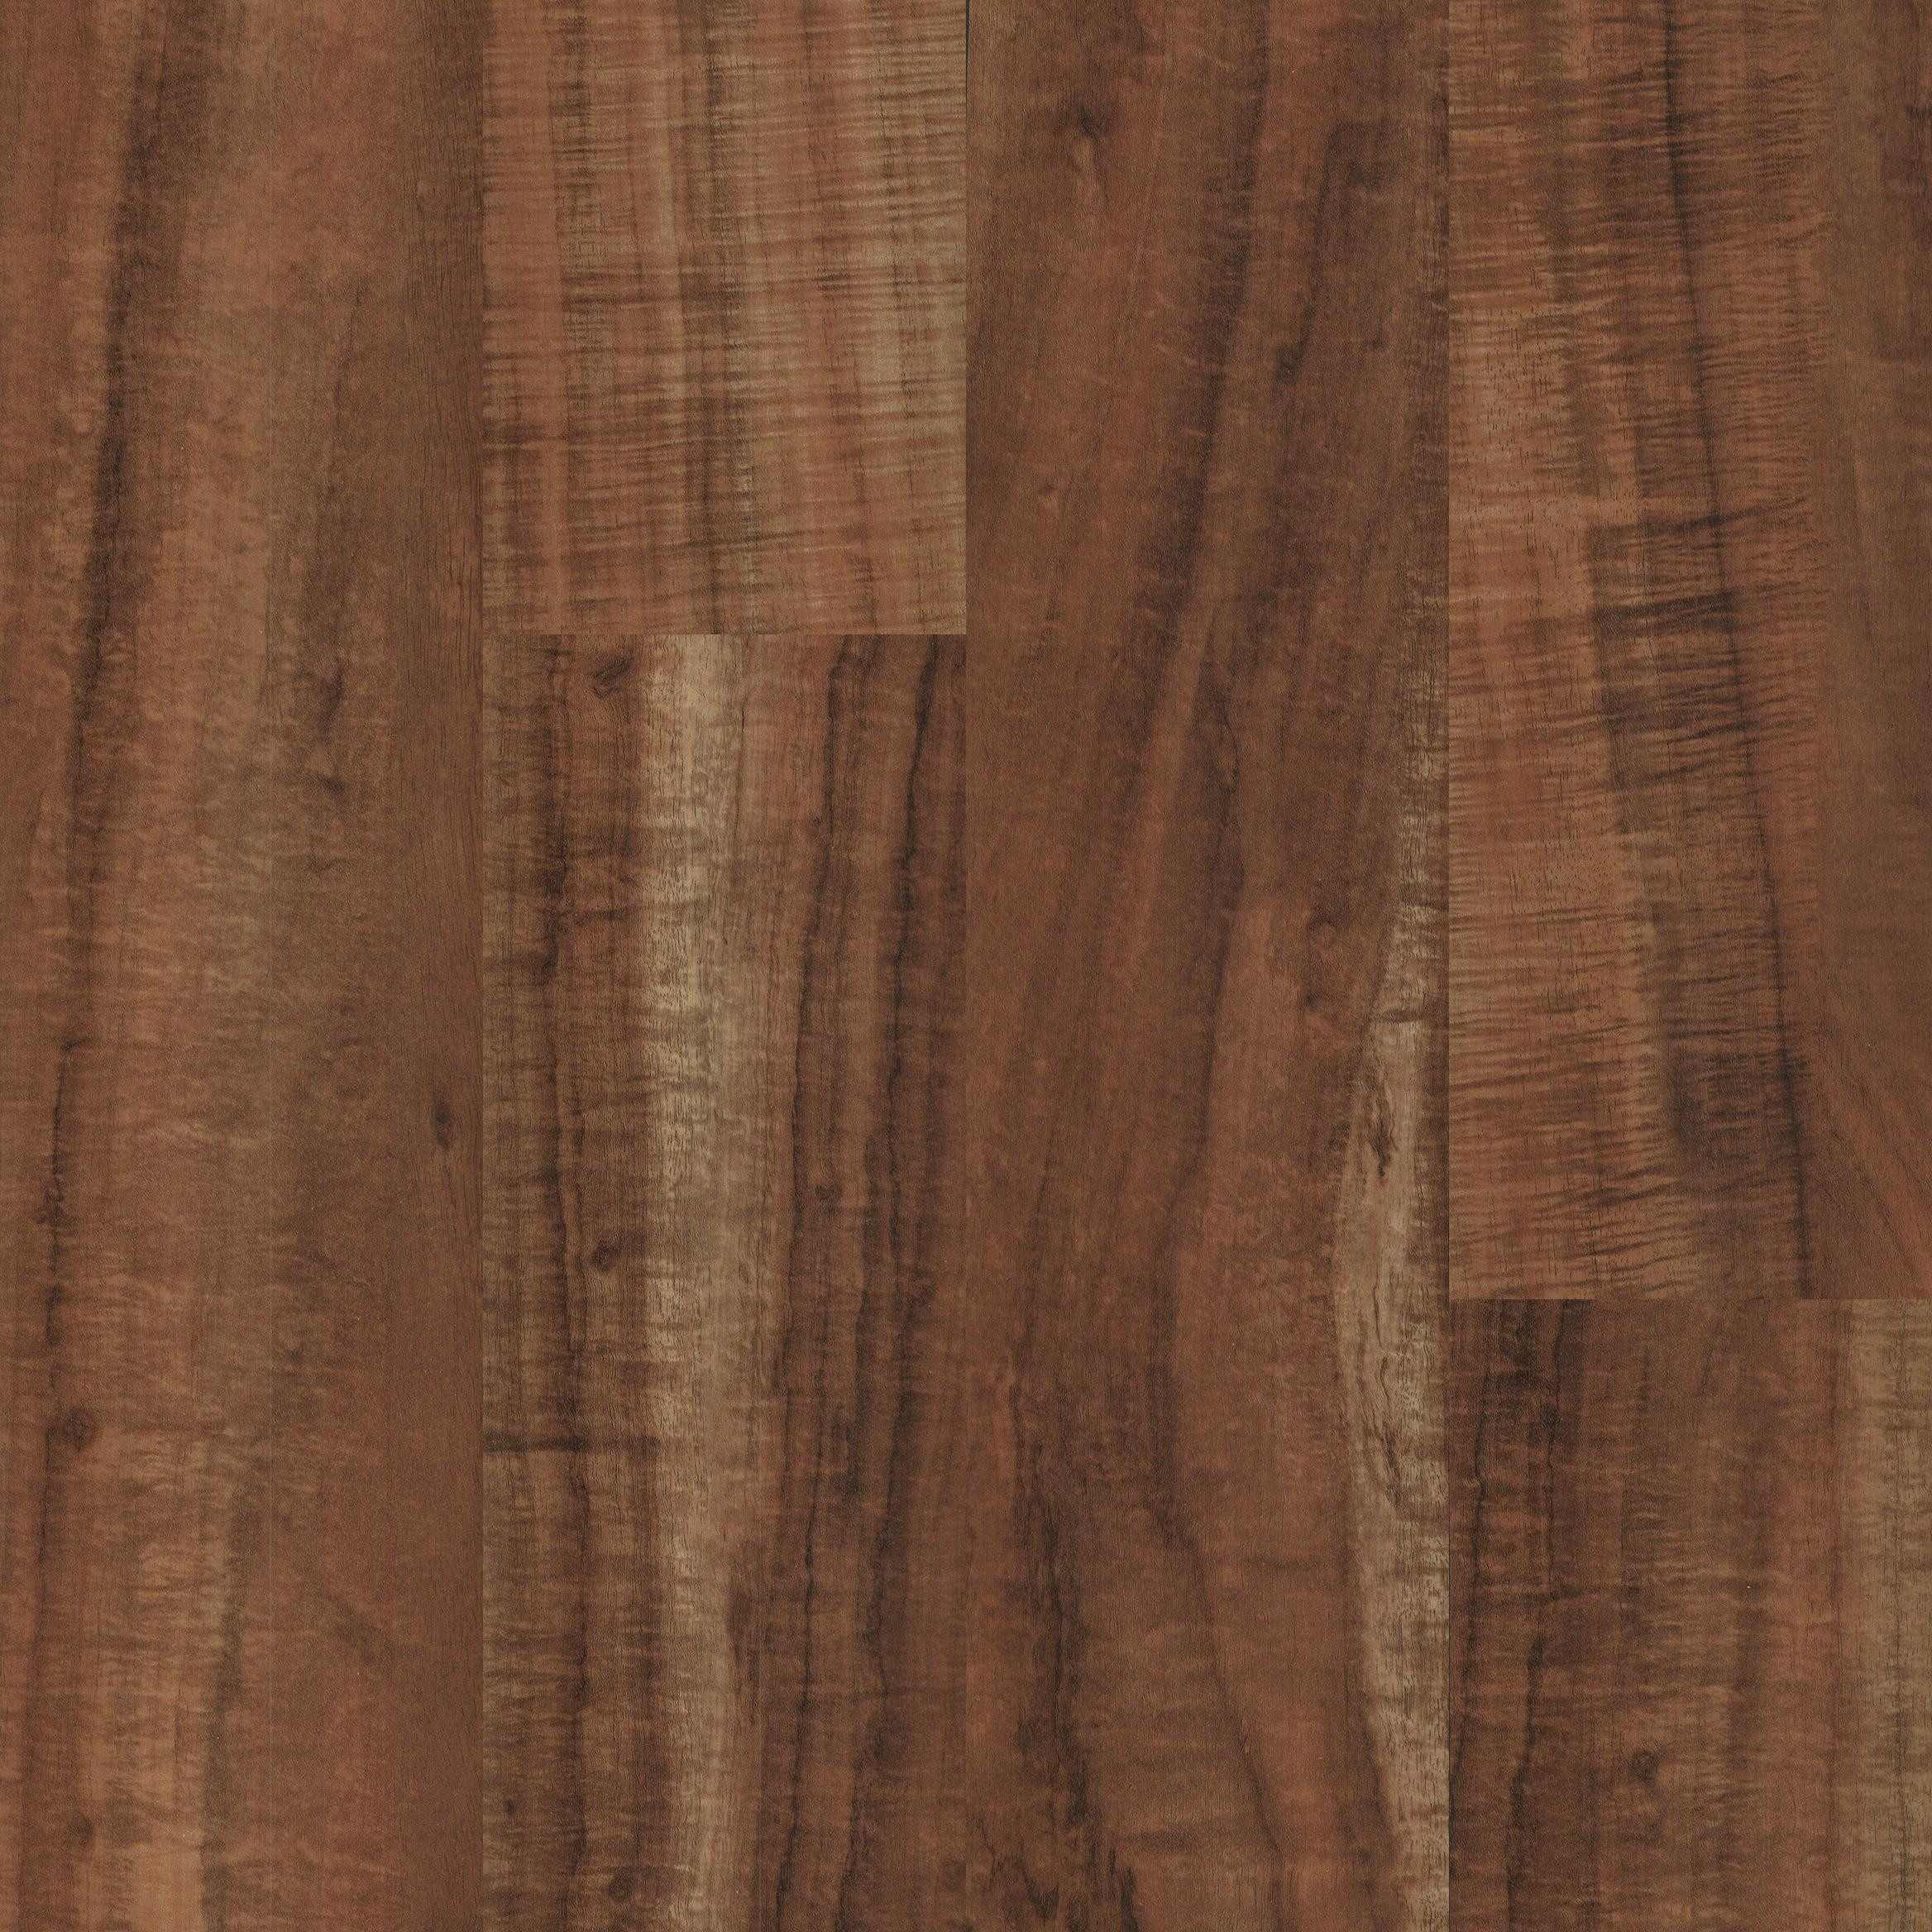 Hardwood Flooring $1 Square Foot Of Ivc Moduleo Horizon Sedona Cherry 6 Waterproof Click together Lvt for More Views